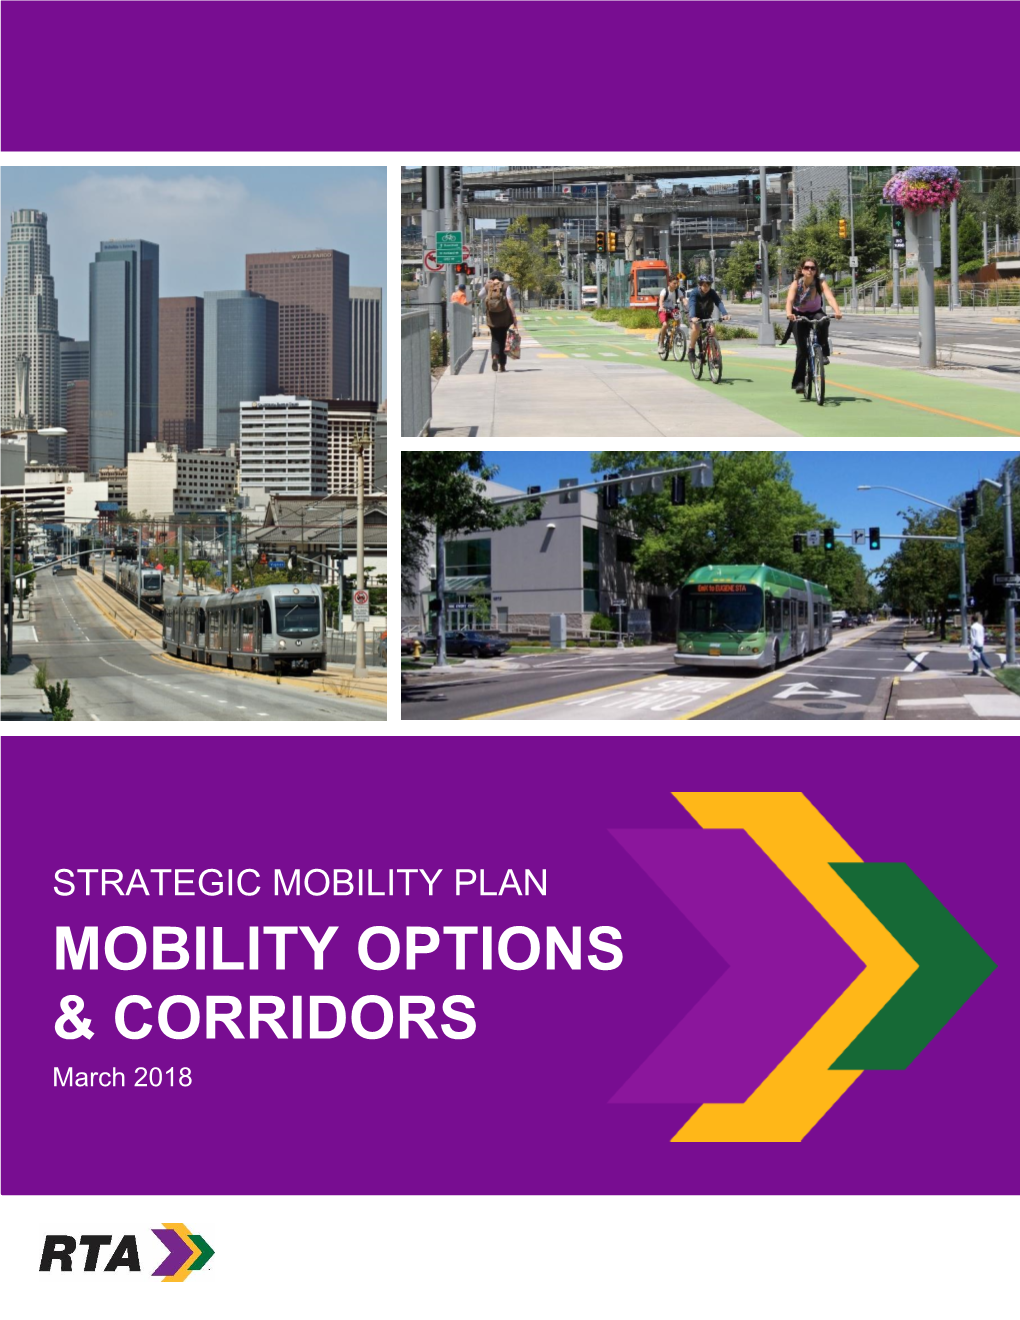 Mobility Options & Corridors